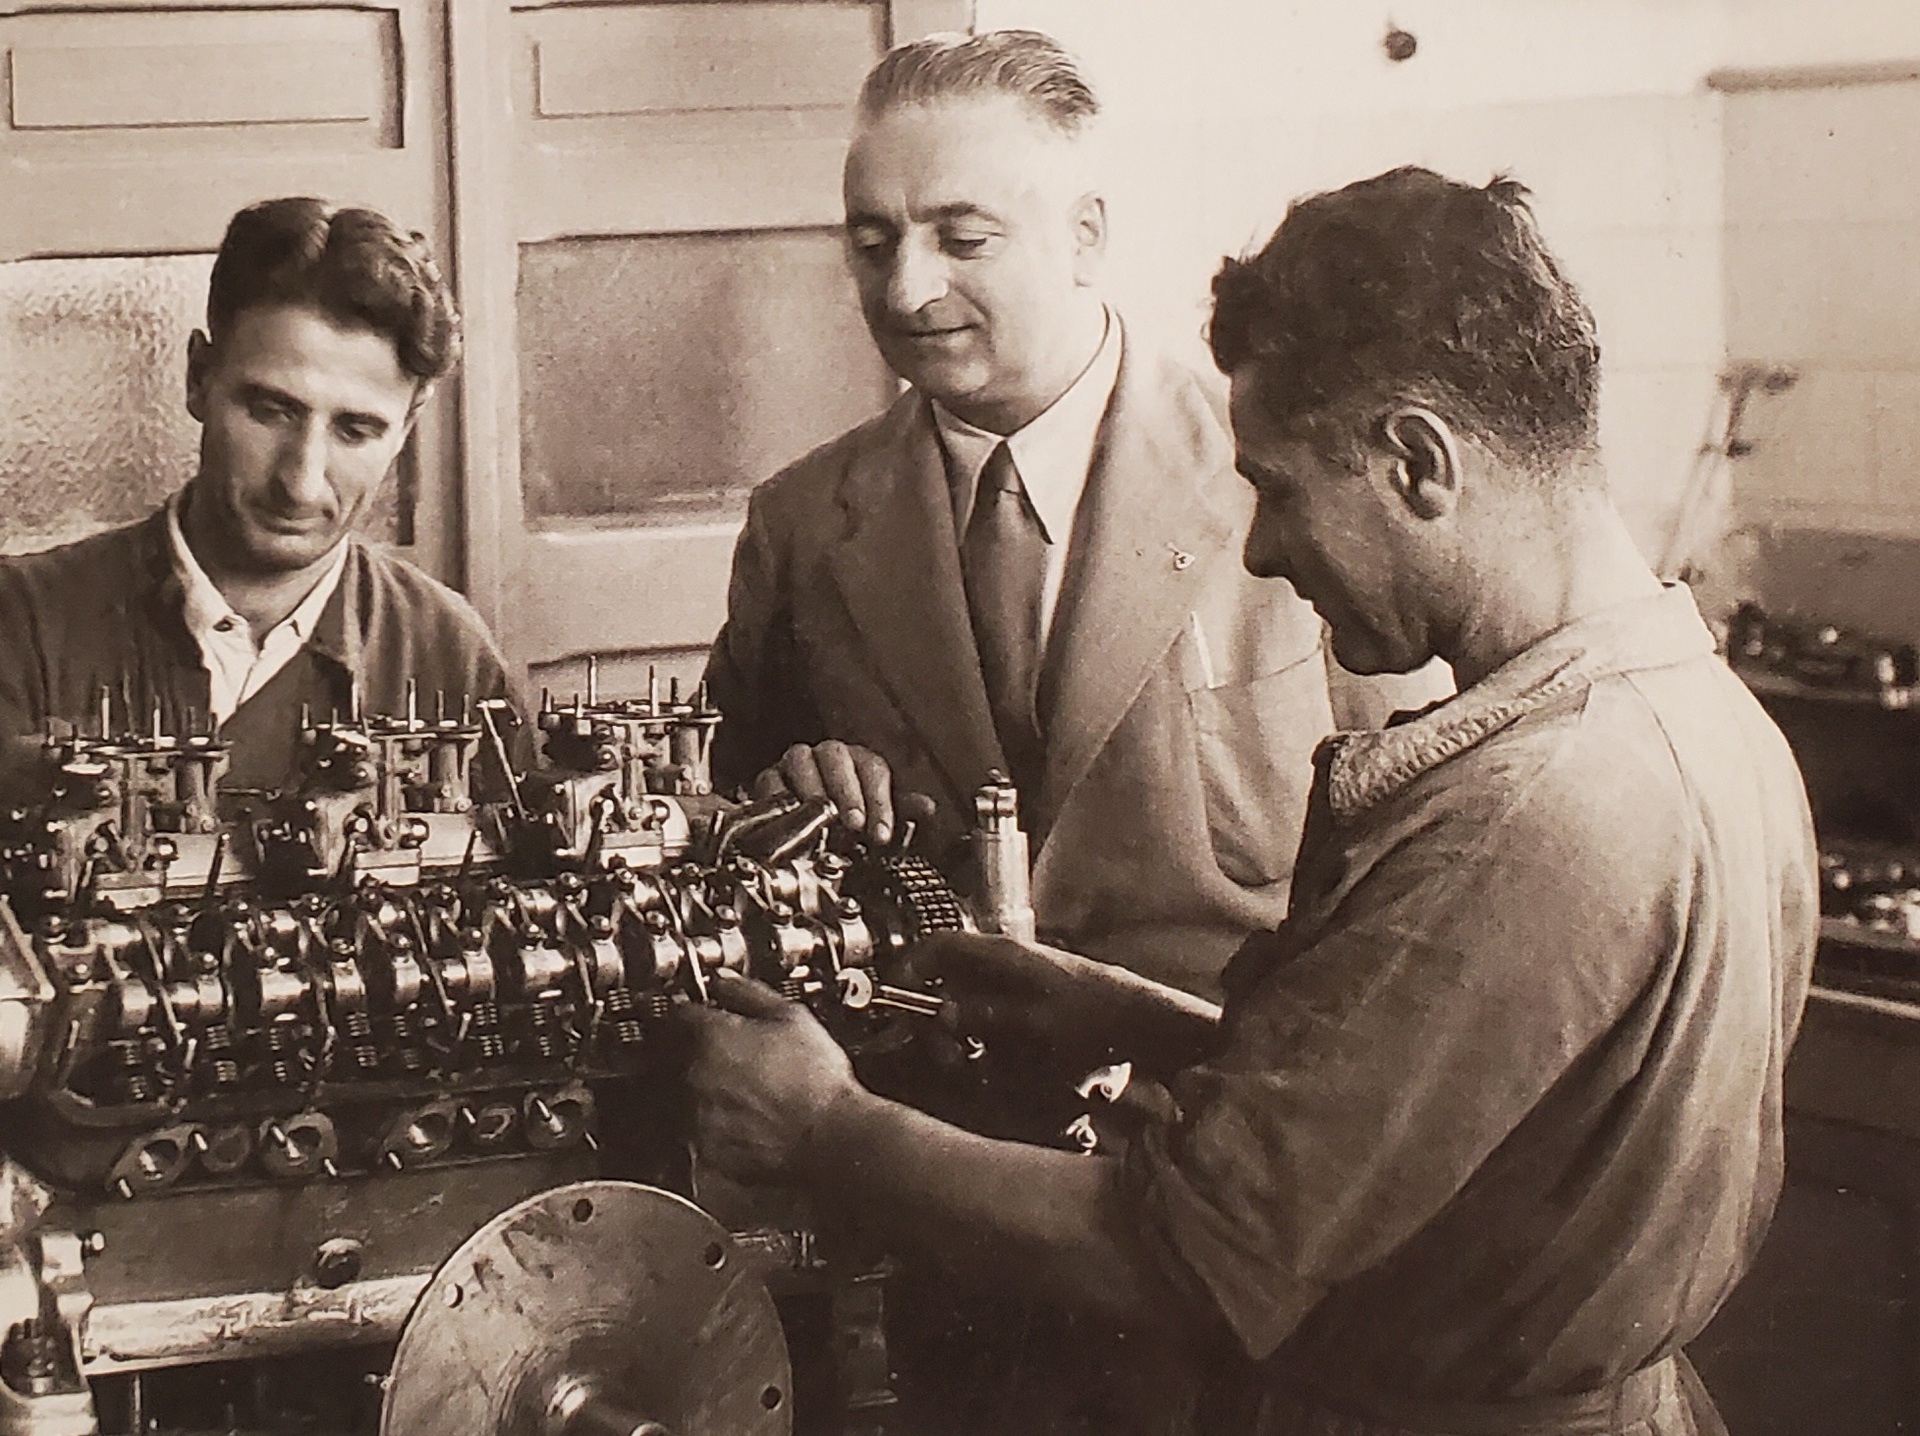 Enzo Ferrari supervising V12 engine assembly in the 1950s